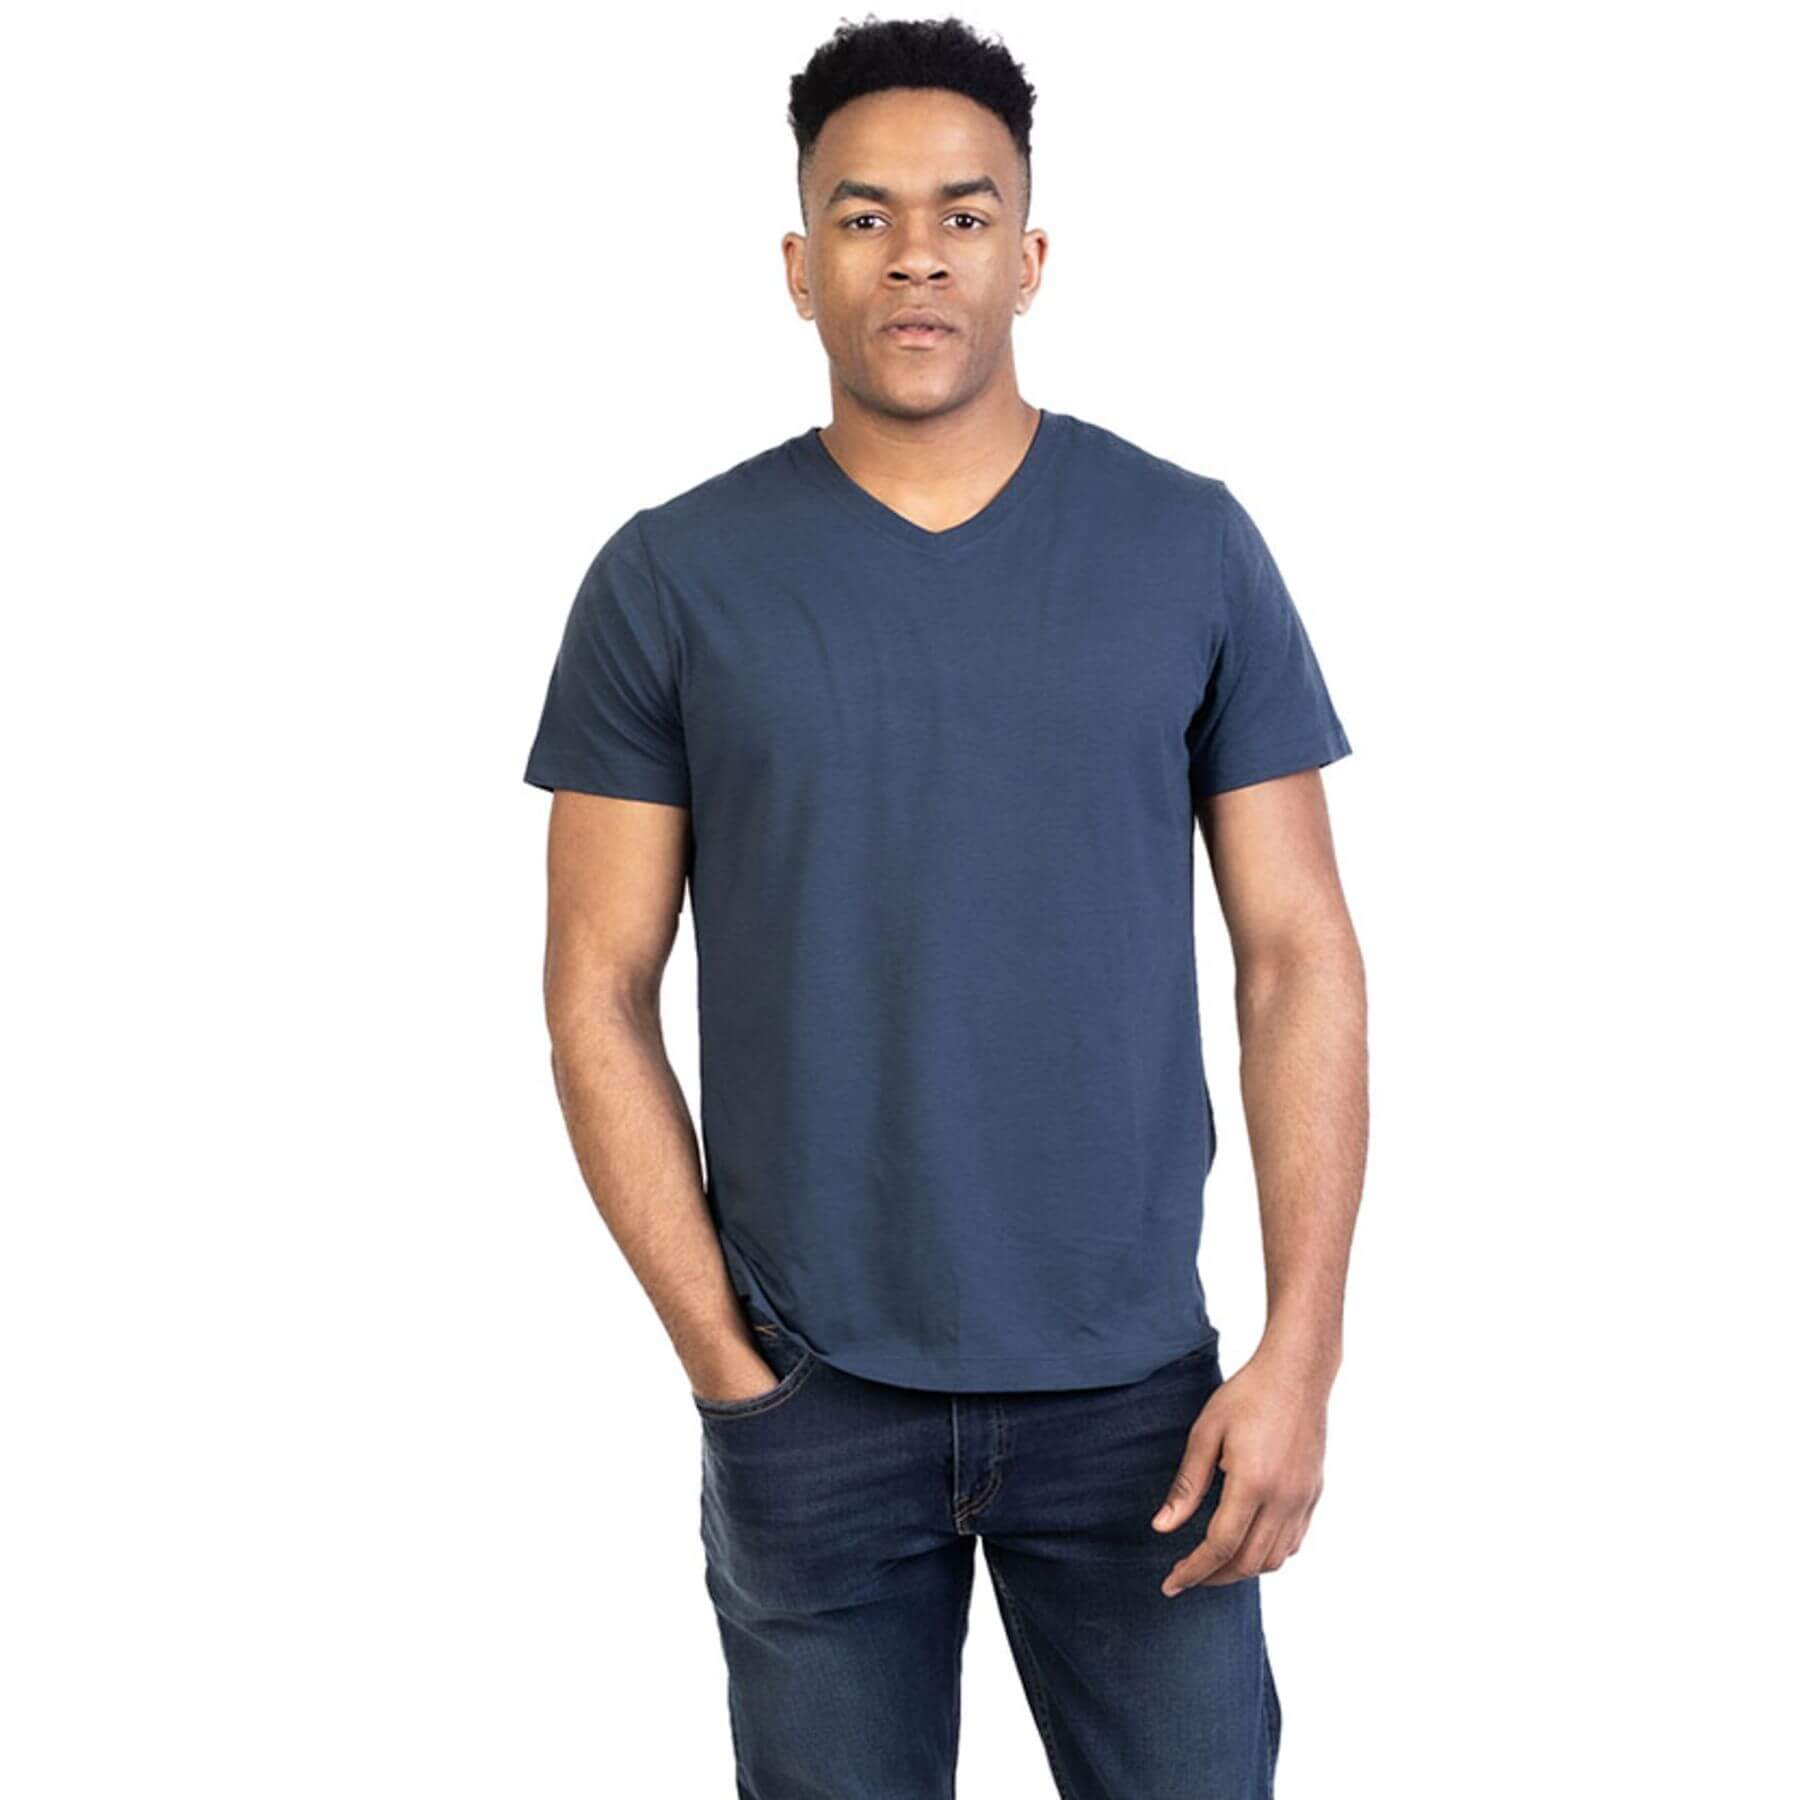 Men’s V-Neck Shirts - Comfort You Can Dress Up | Revtown